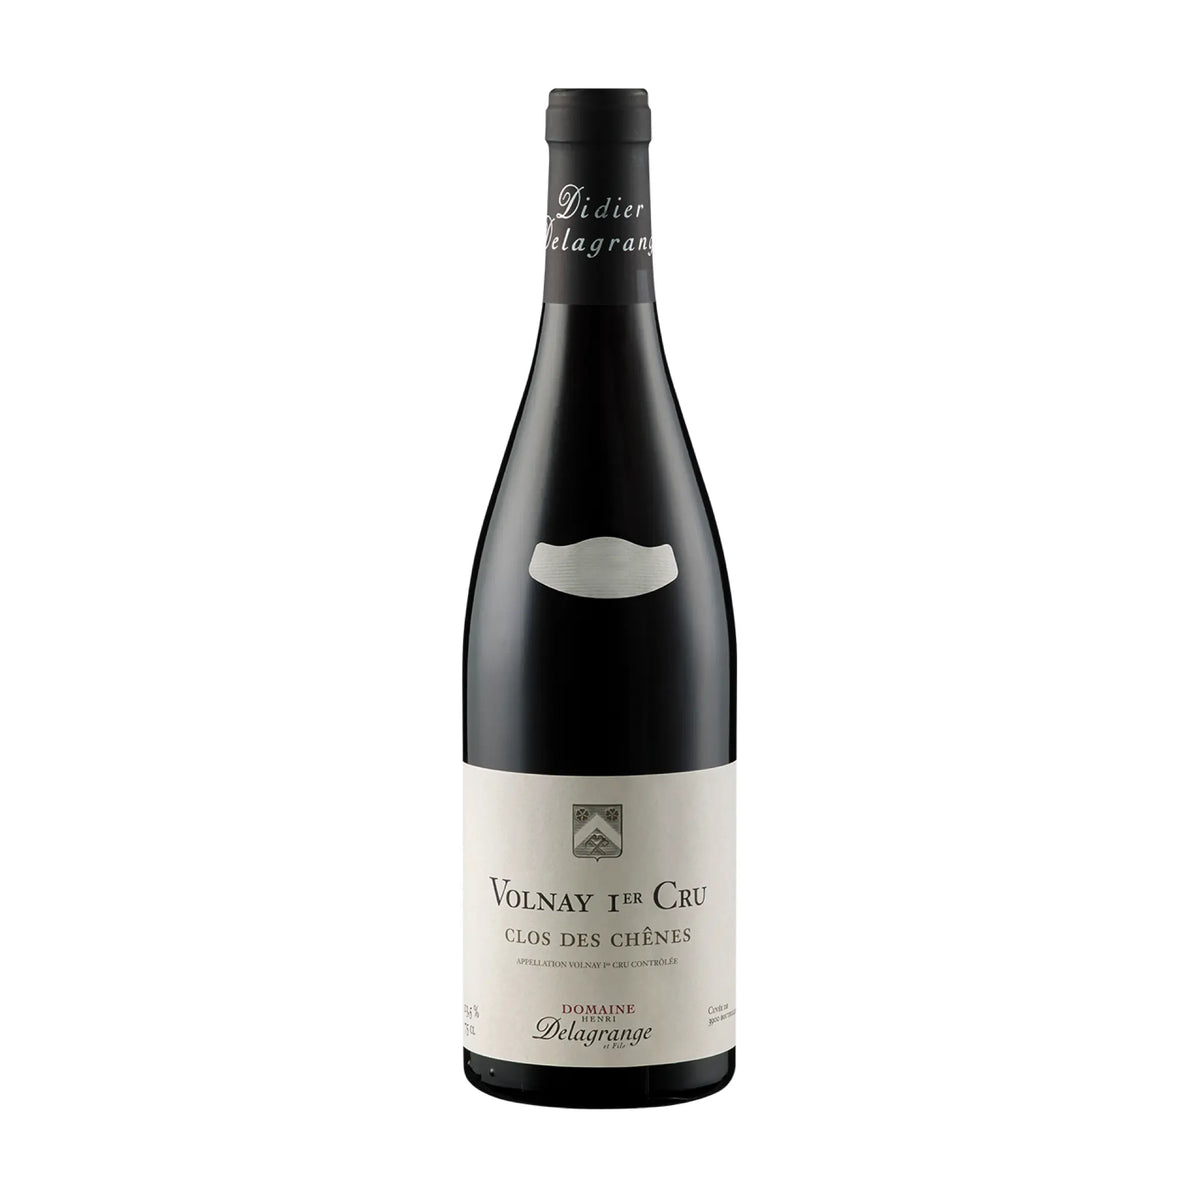 Domaine Henri Delagrange et fils-Rotwein-Pinot Noir-Frankreich-Burgund-2019 Volnay 1er Cru Clos des Chênes AOC-WINECOM